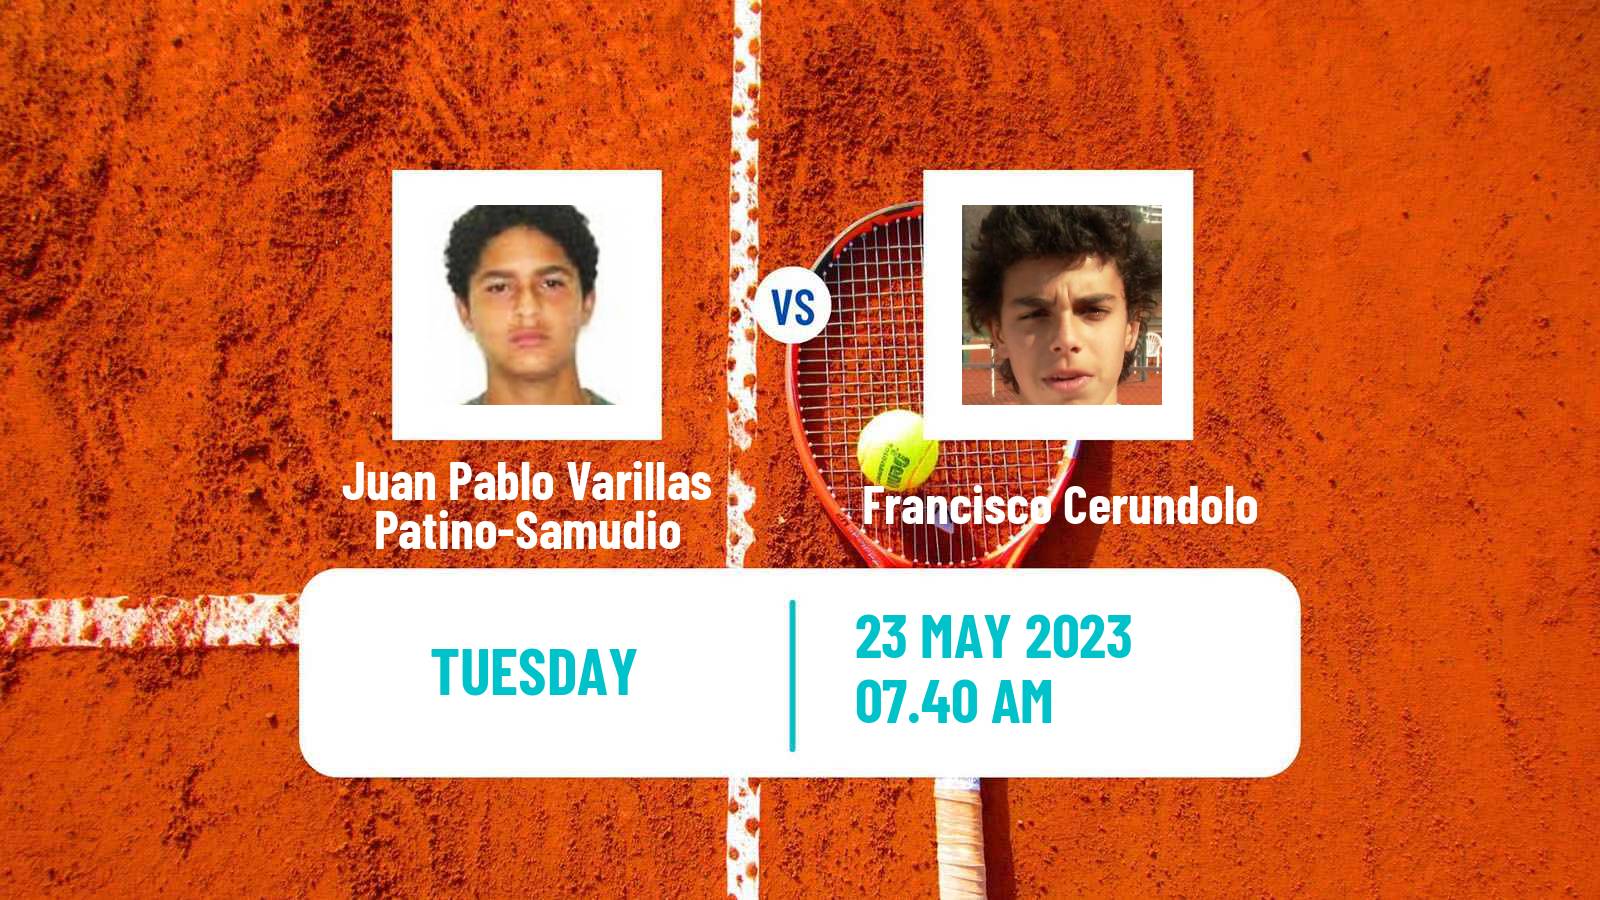 Tennis ATP Lyon Juan Pablo Varillas Patino-Samudio - Francisco Cerundolo